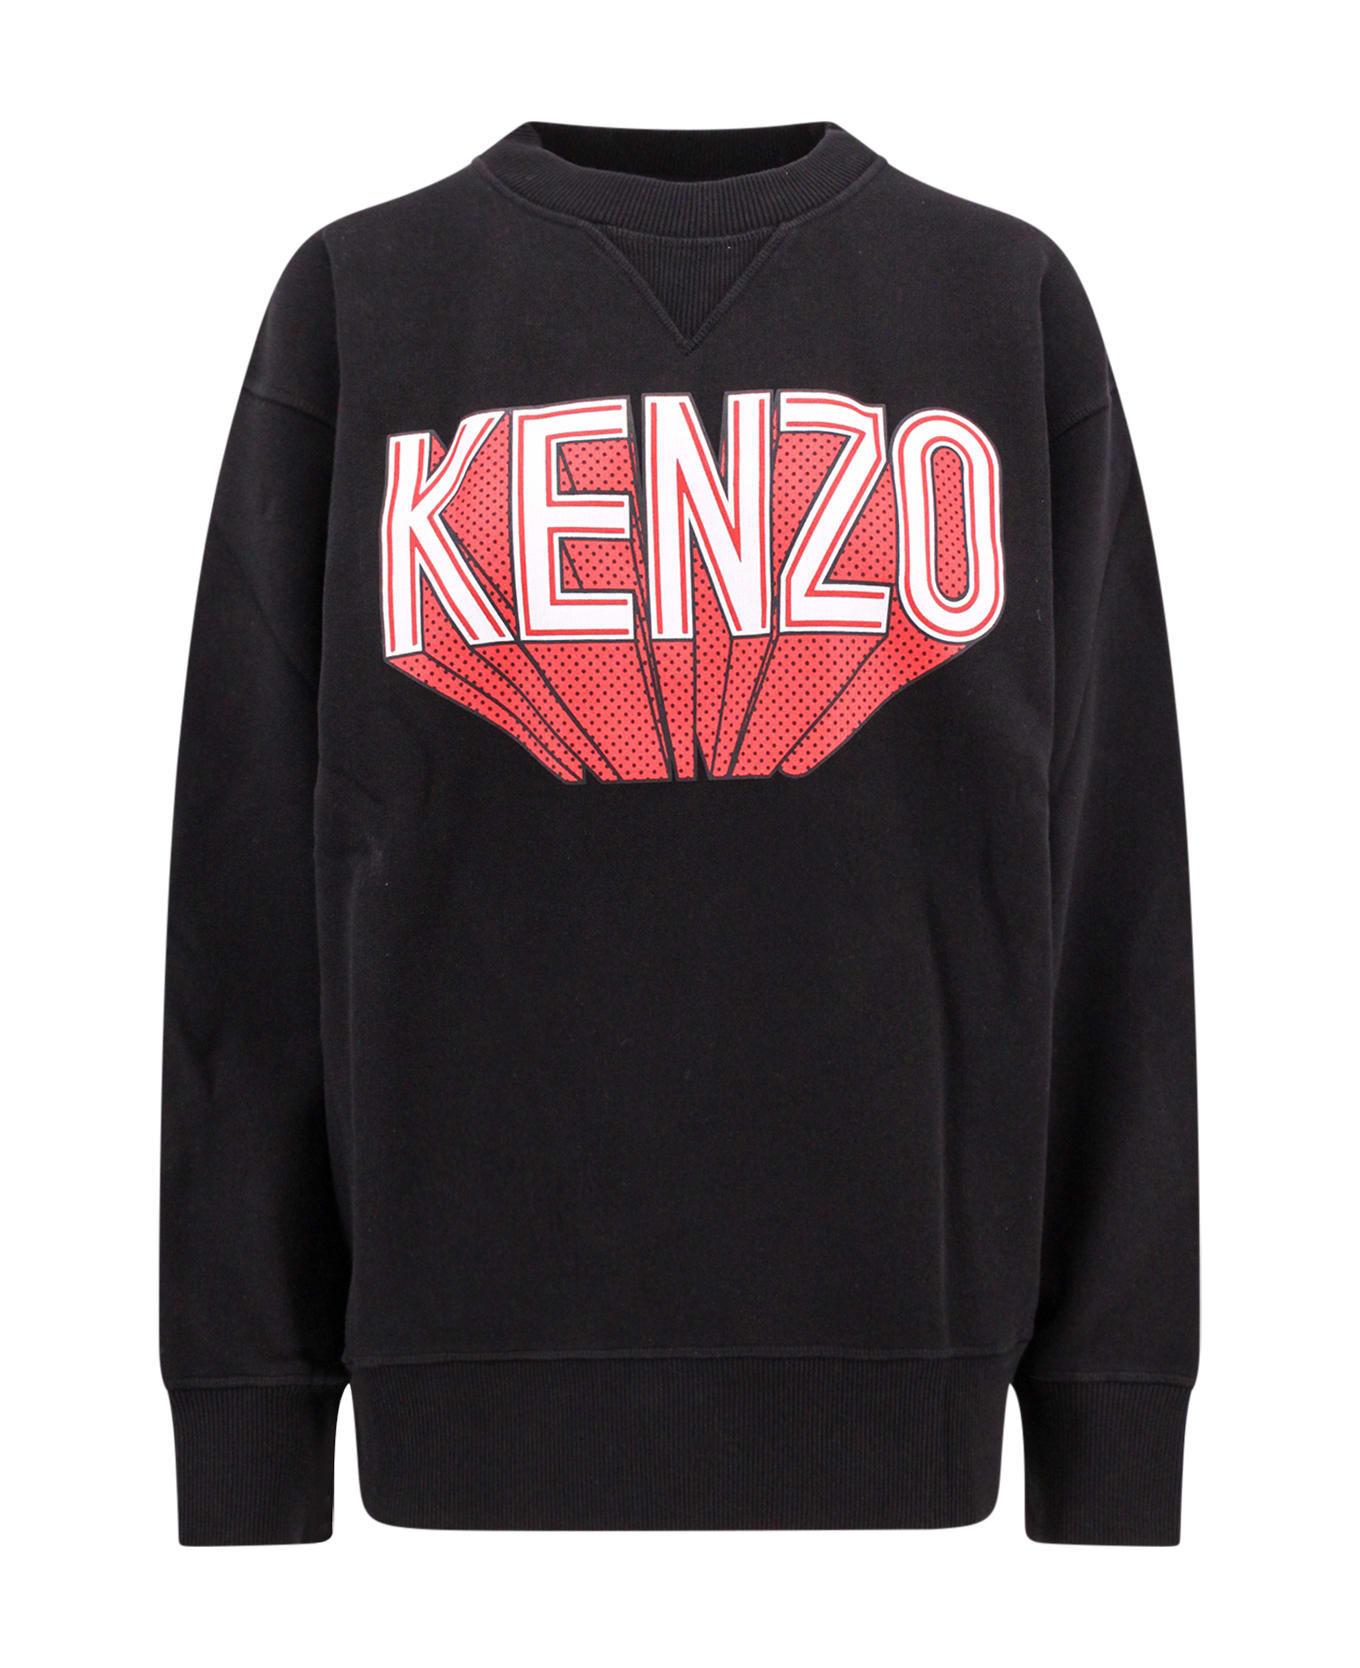 Kenzo Logo Printed Crewneck Sweatshirt - Black